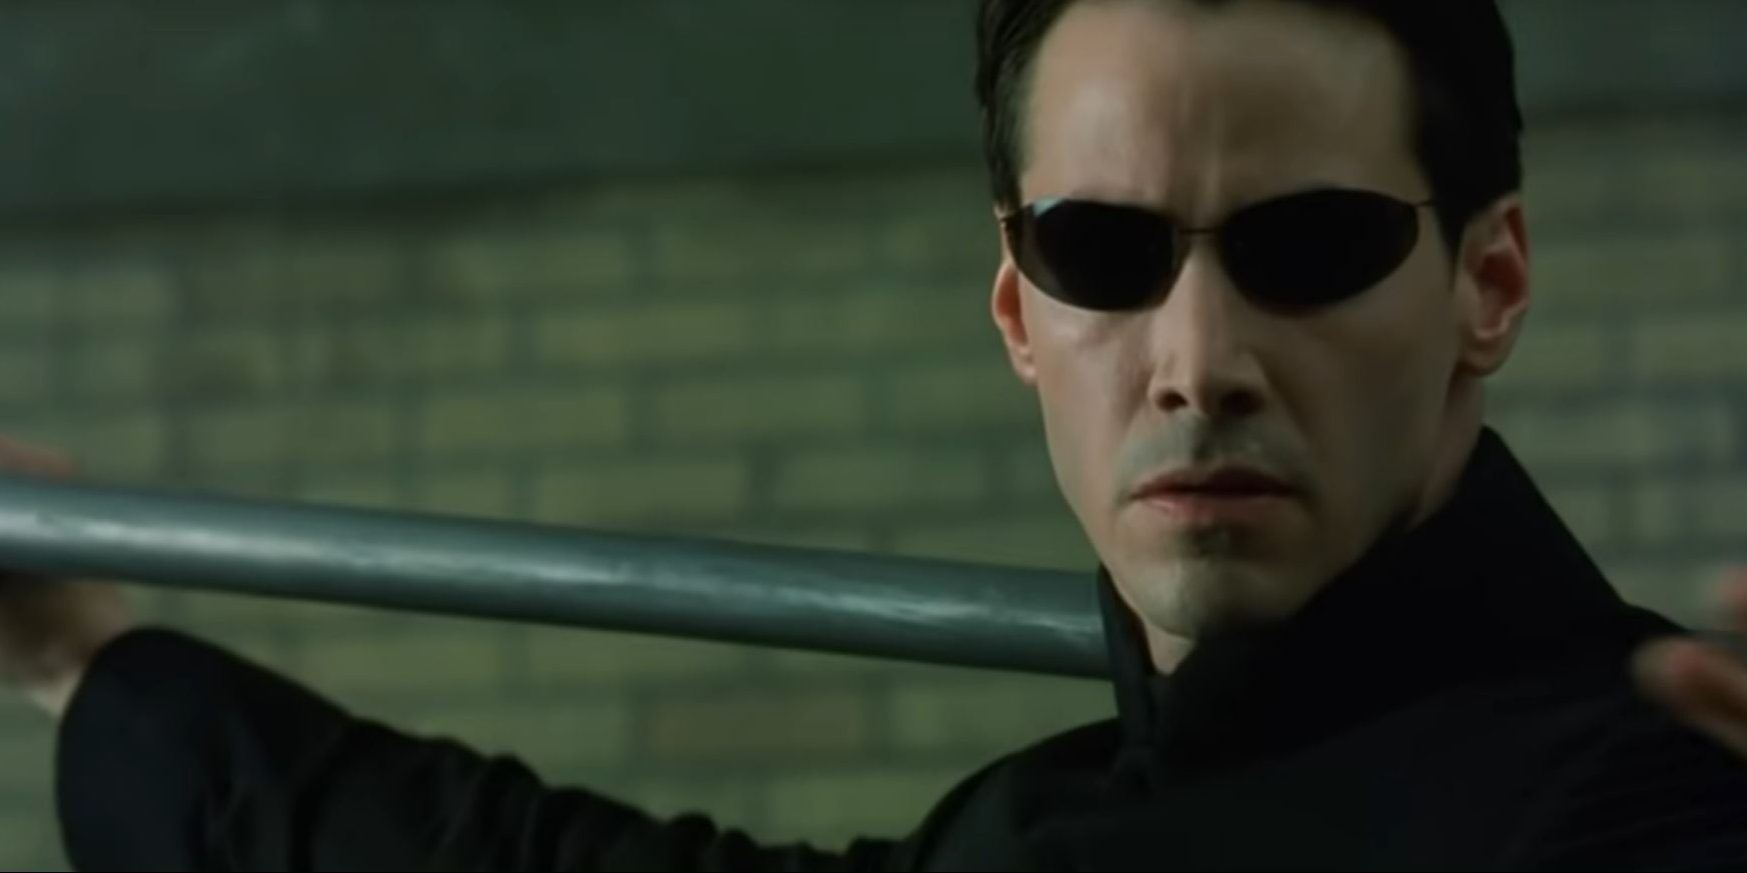 Neo wielding a metal pipe in The Matrix Reloaded